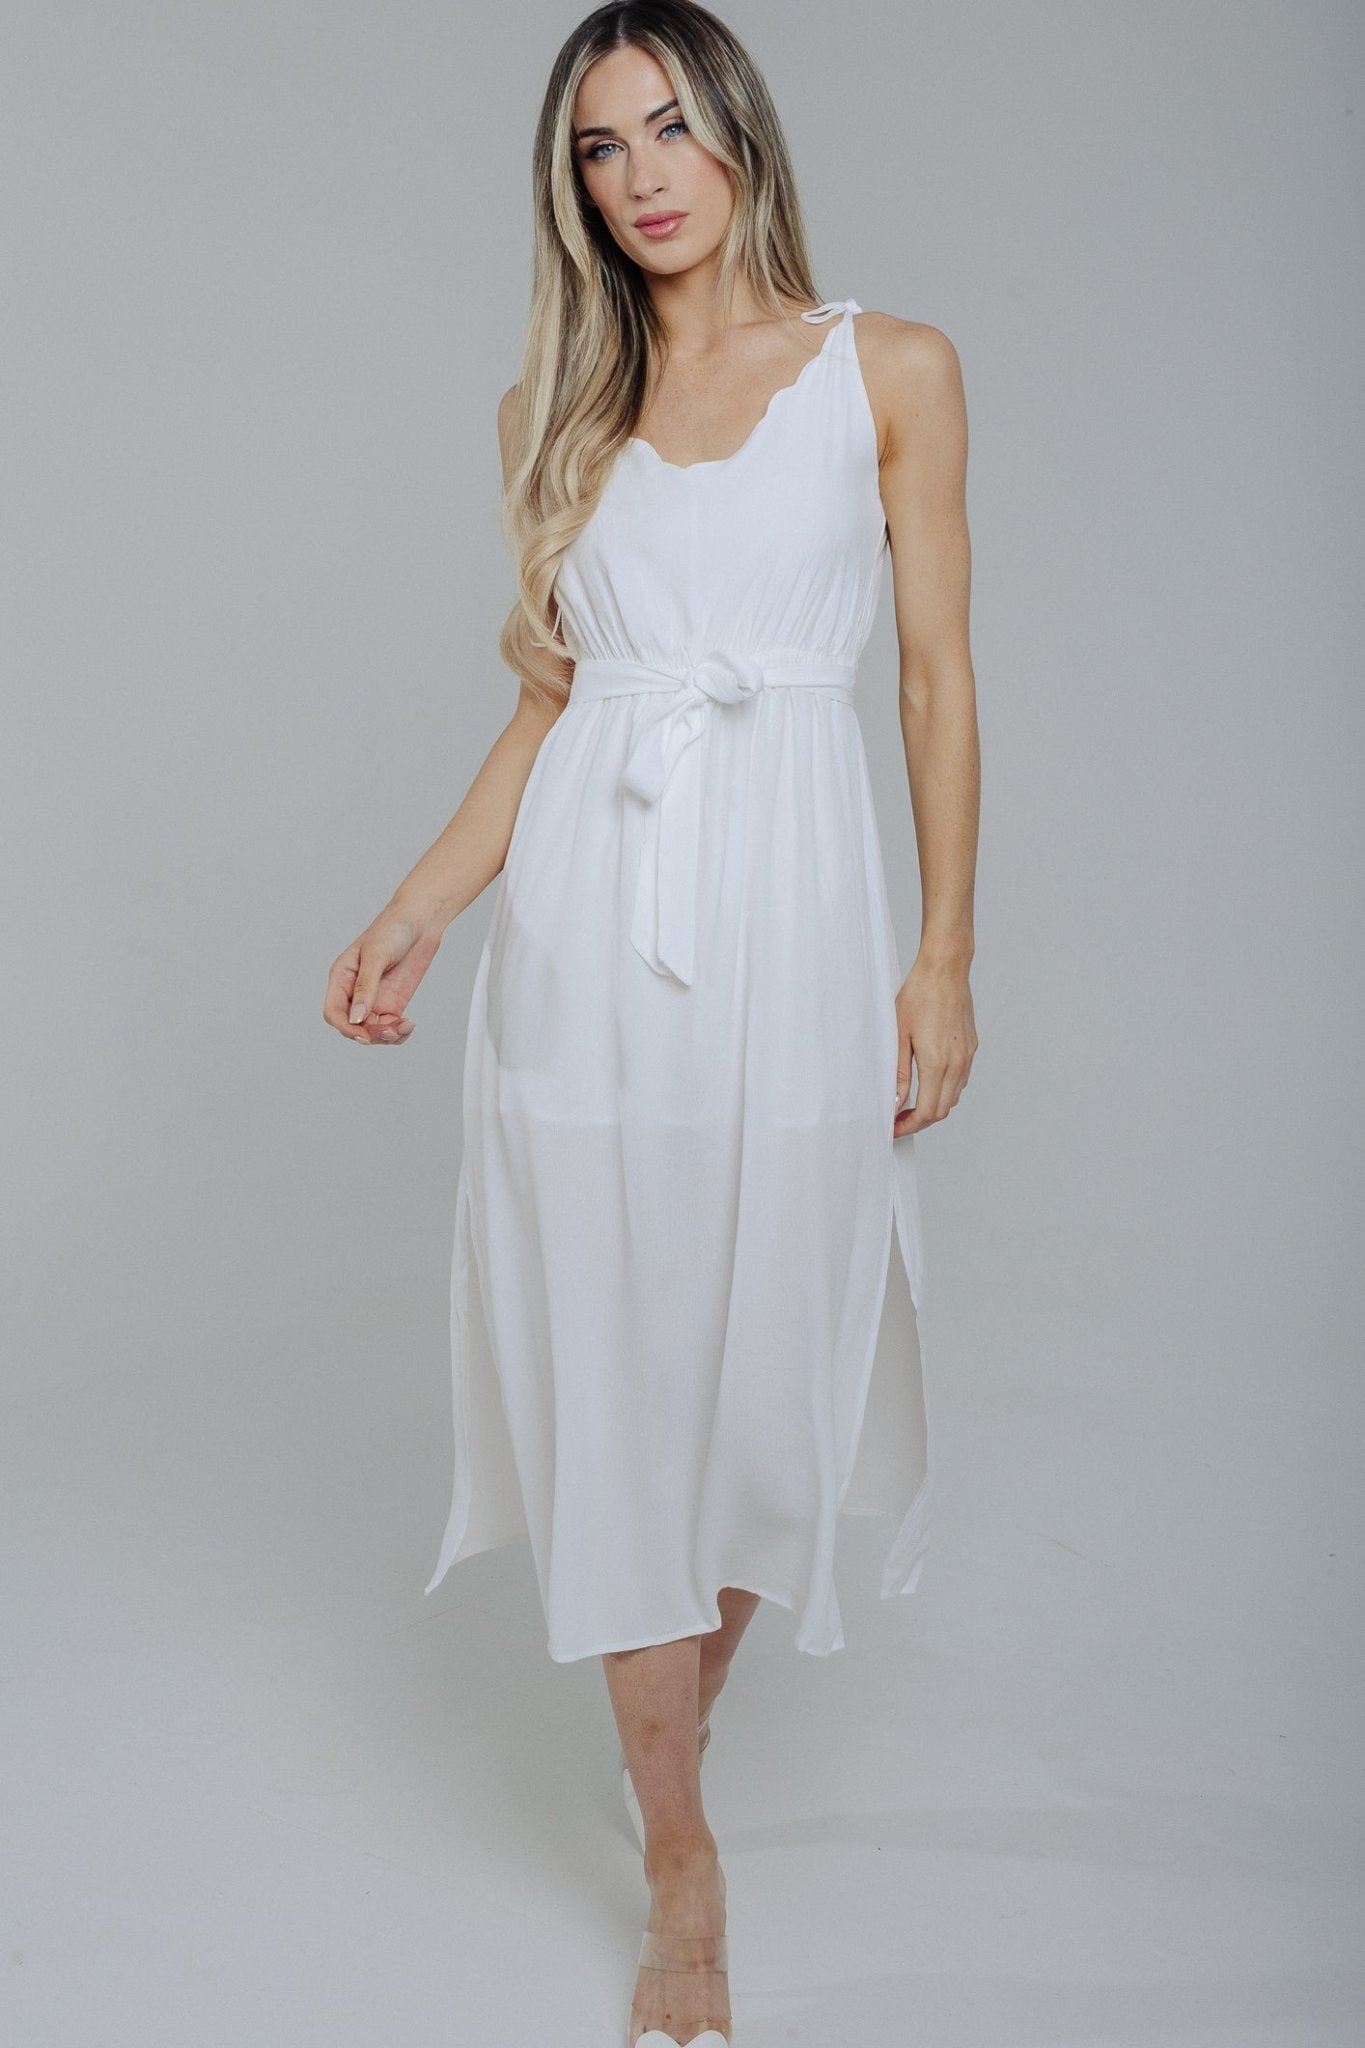 Jane Tie Shoulder Detail Dress In White - The Walk in Wardrobe